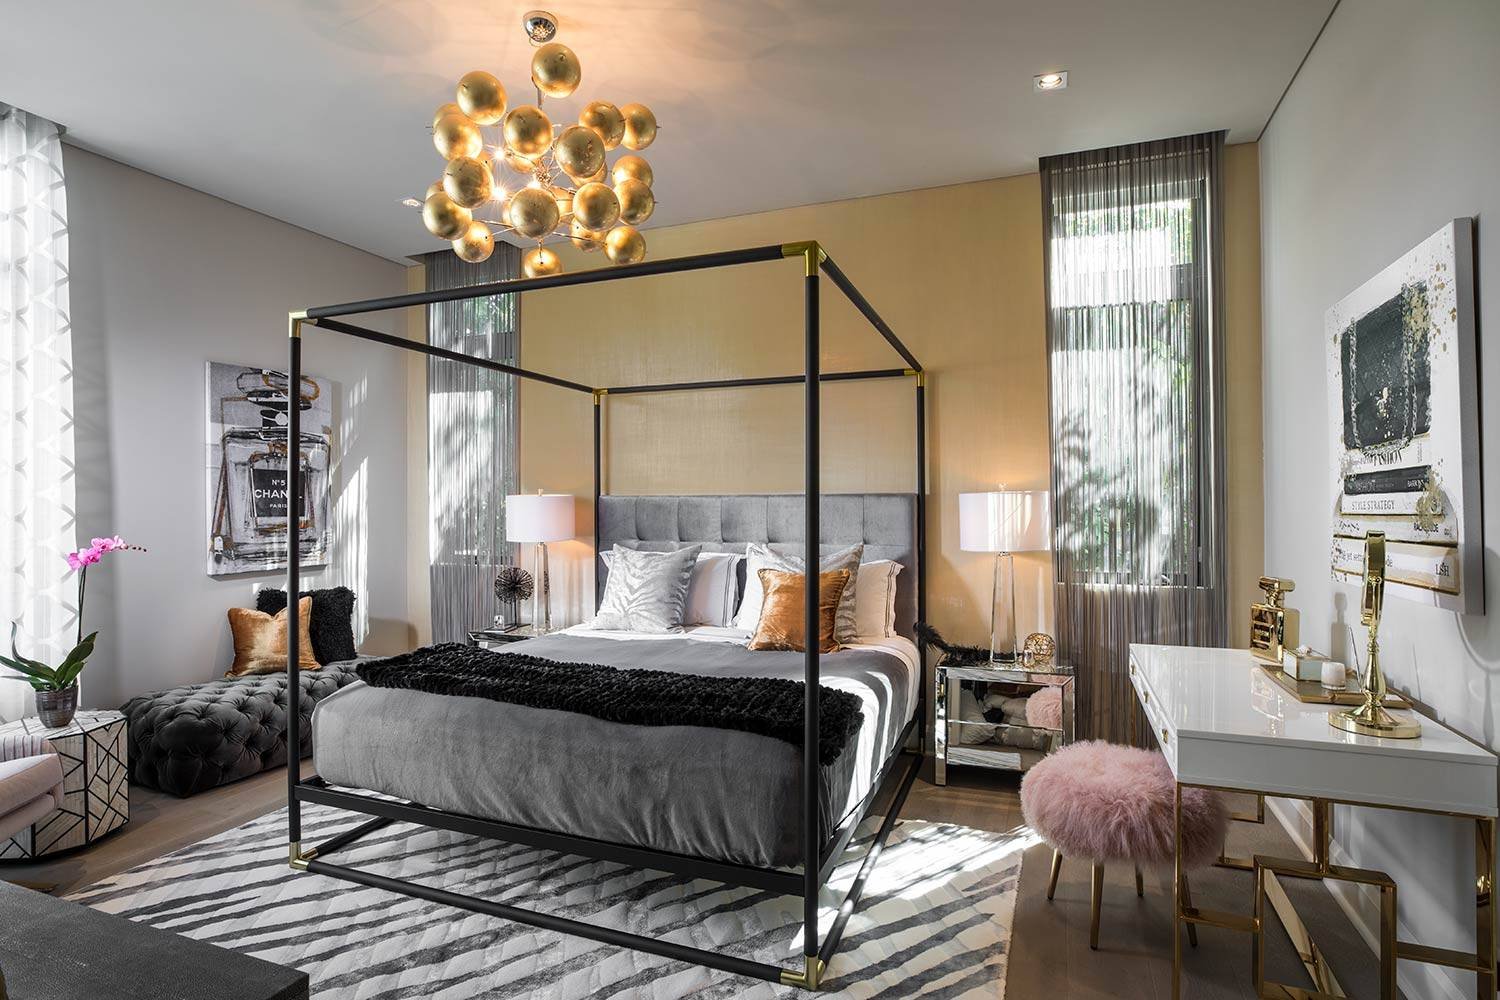 Luxury bedroom interior, by Decorilla designer Renata P